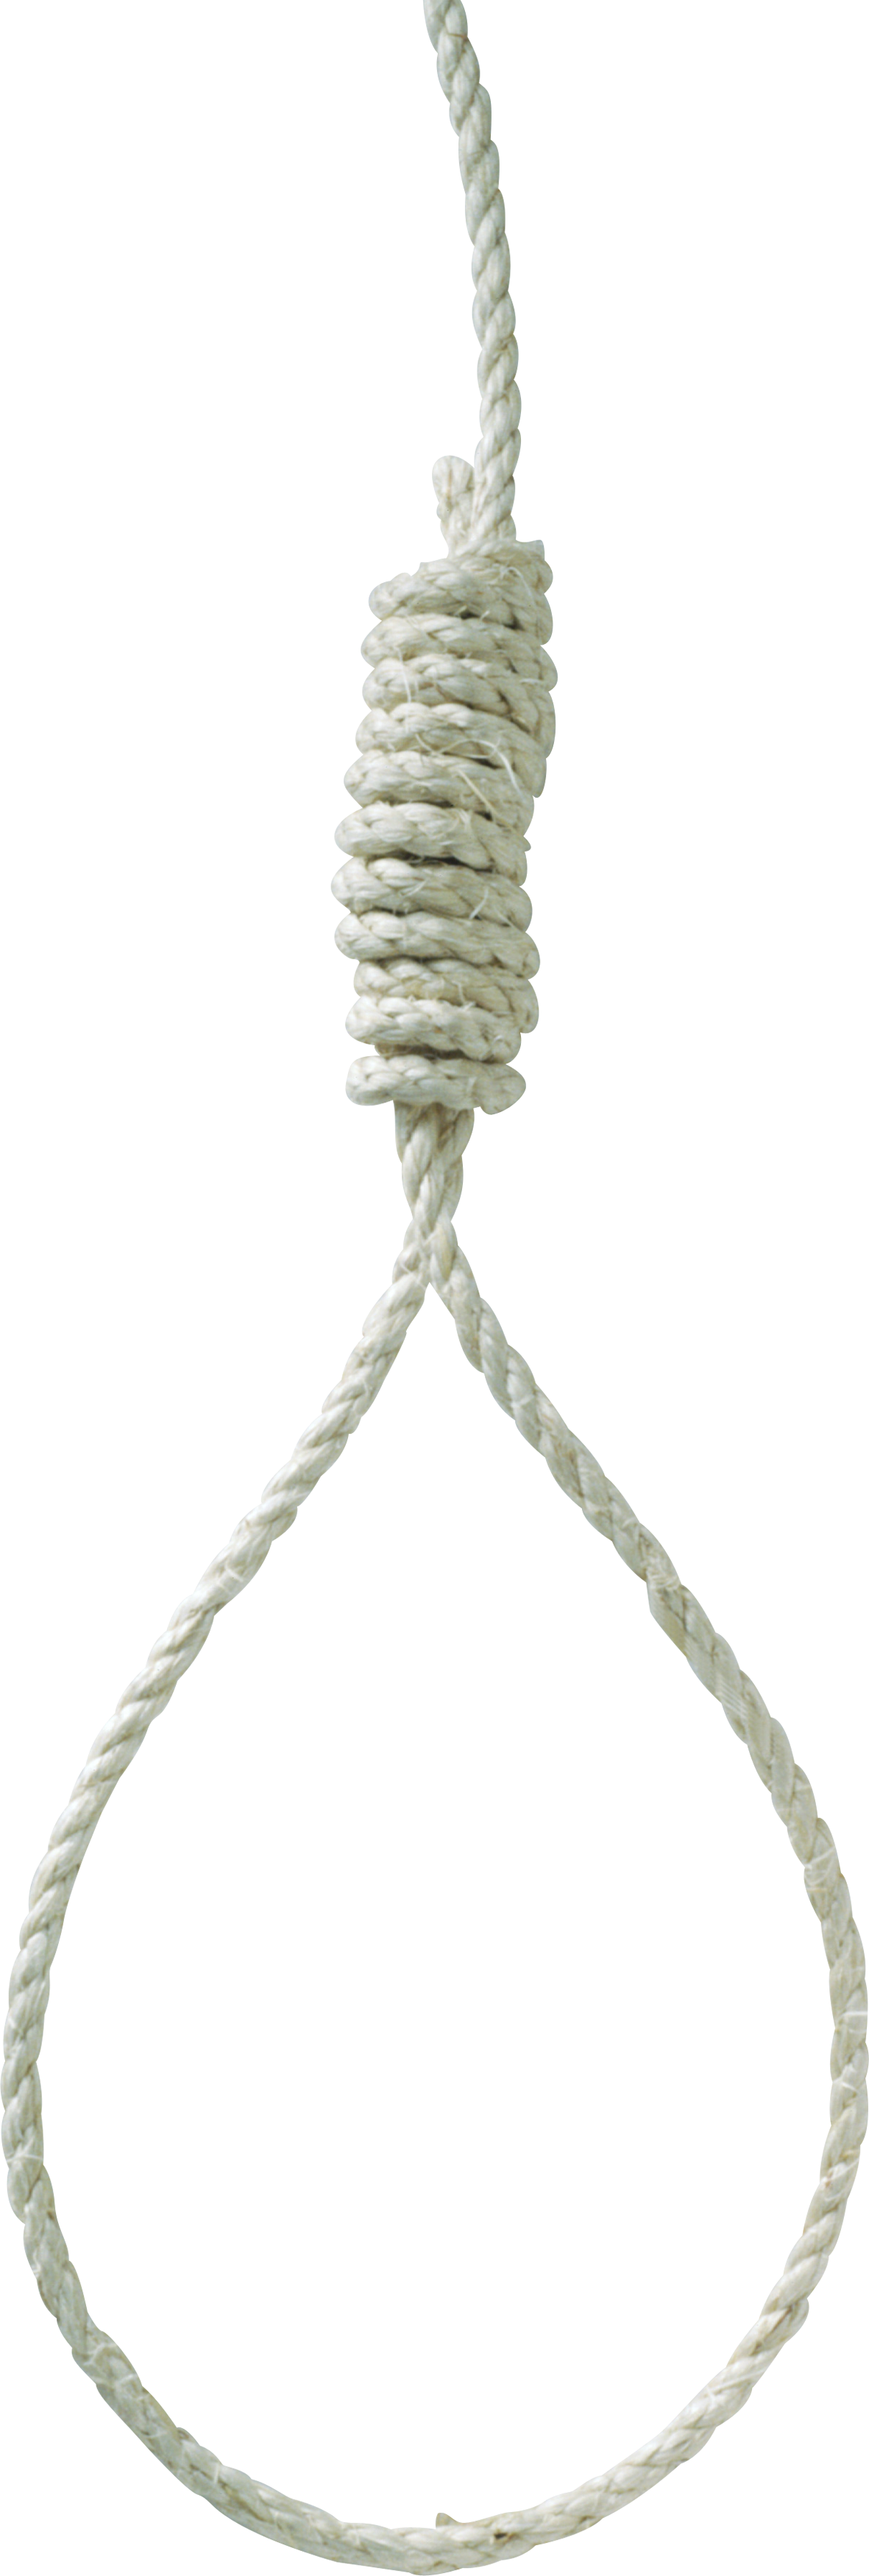 Boucle de corde suspendue